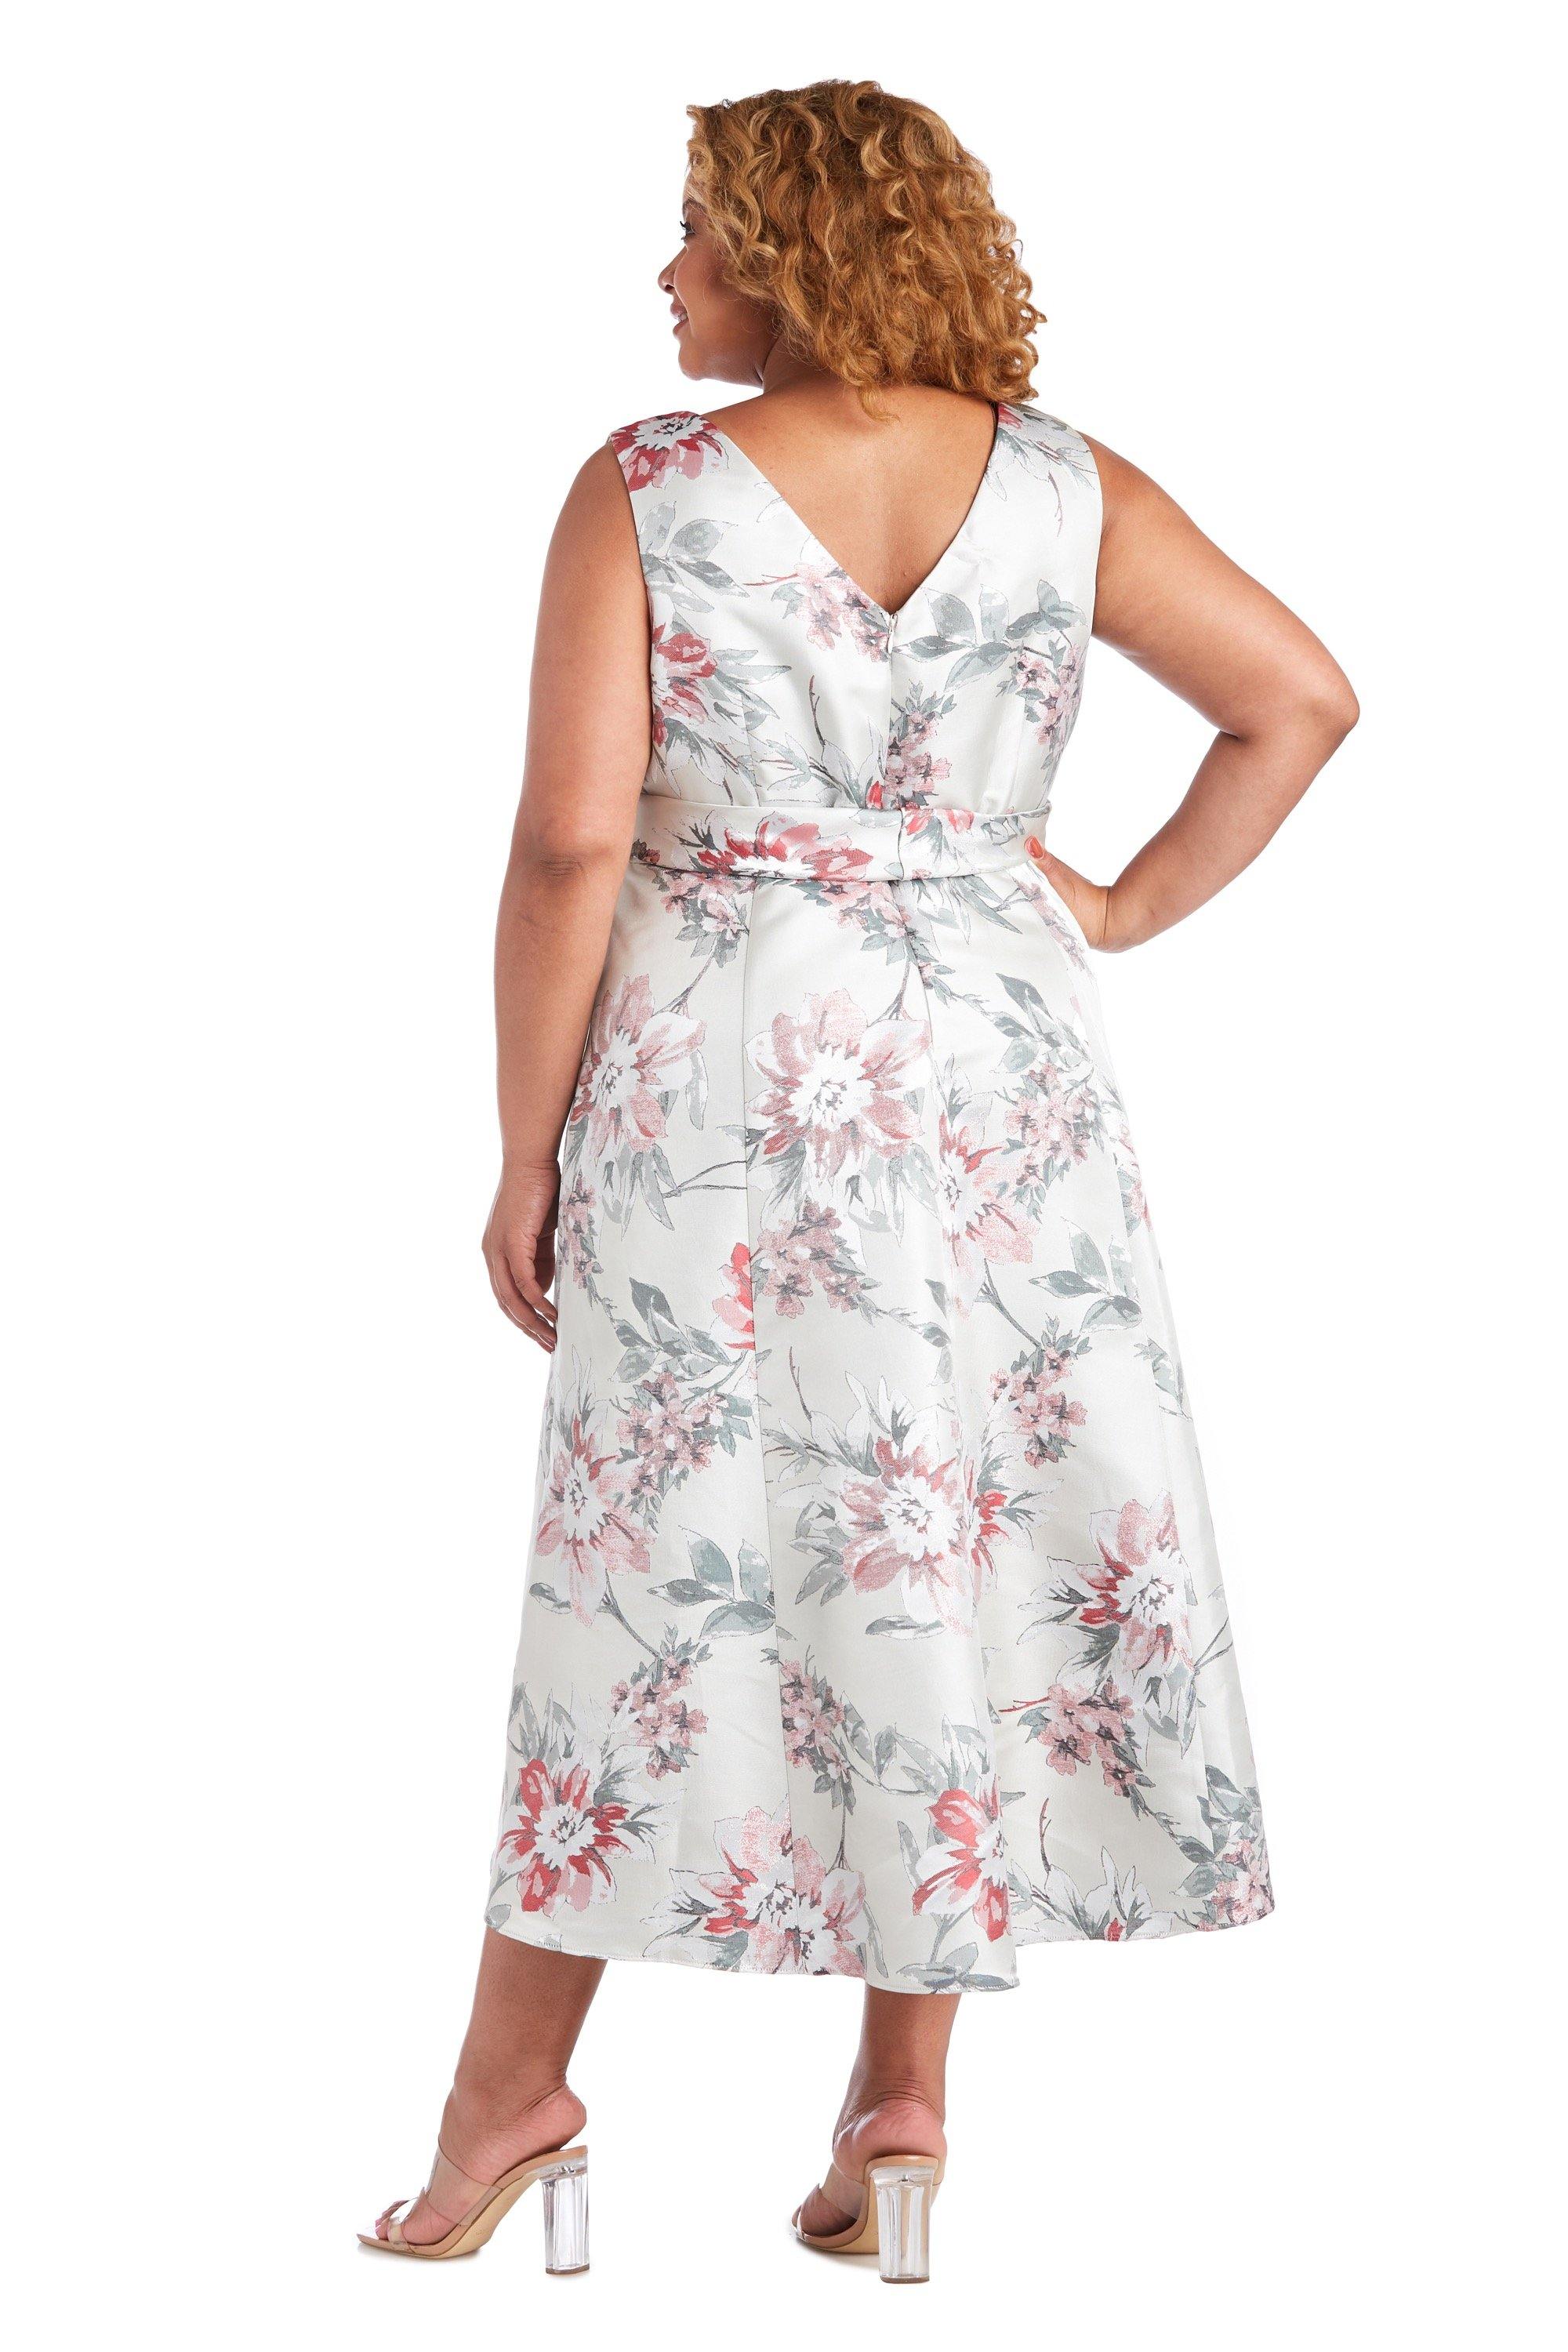 R&M Richards High Low Plus Size Floral Dress 7213W - The Dress Outlet